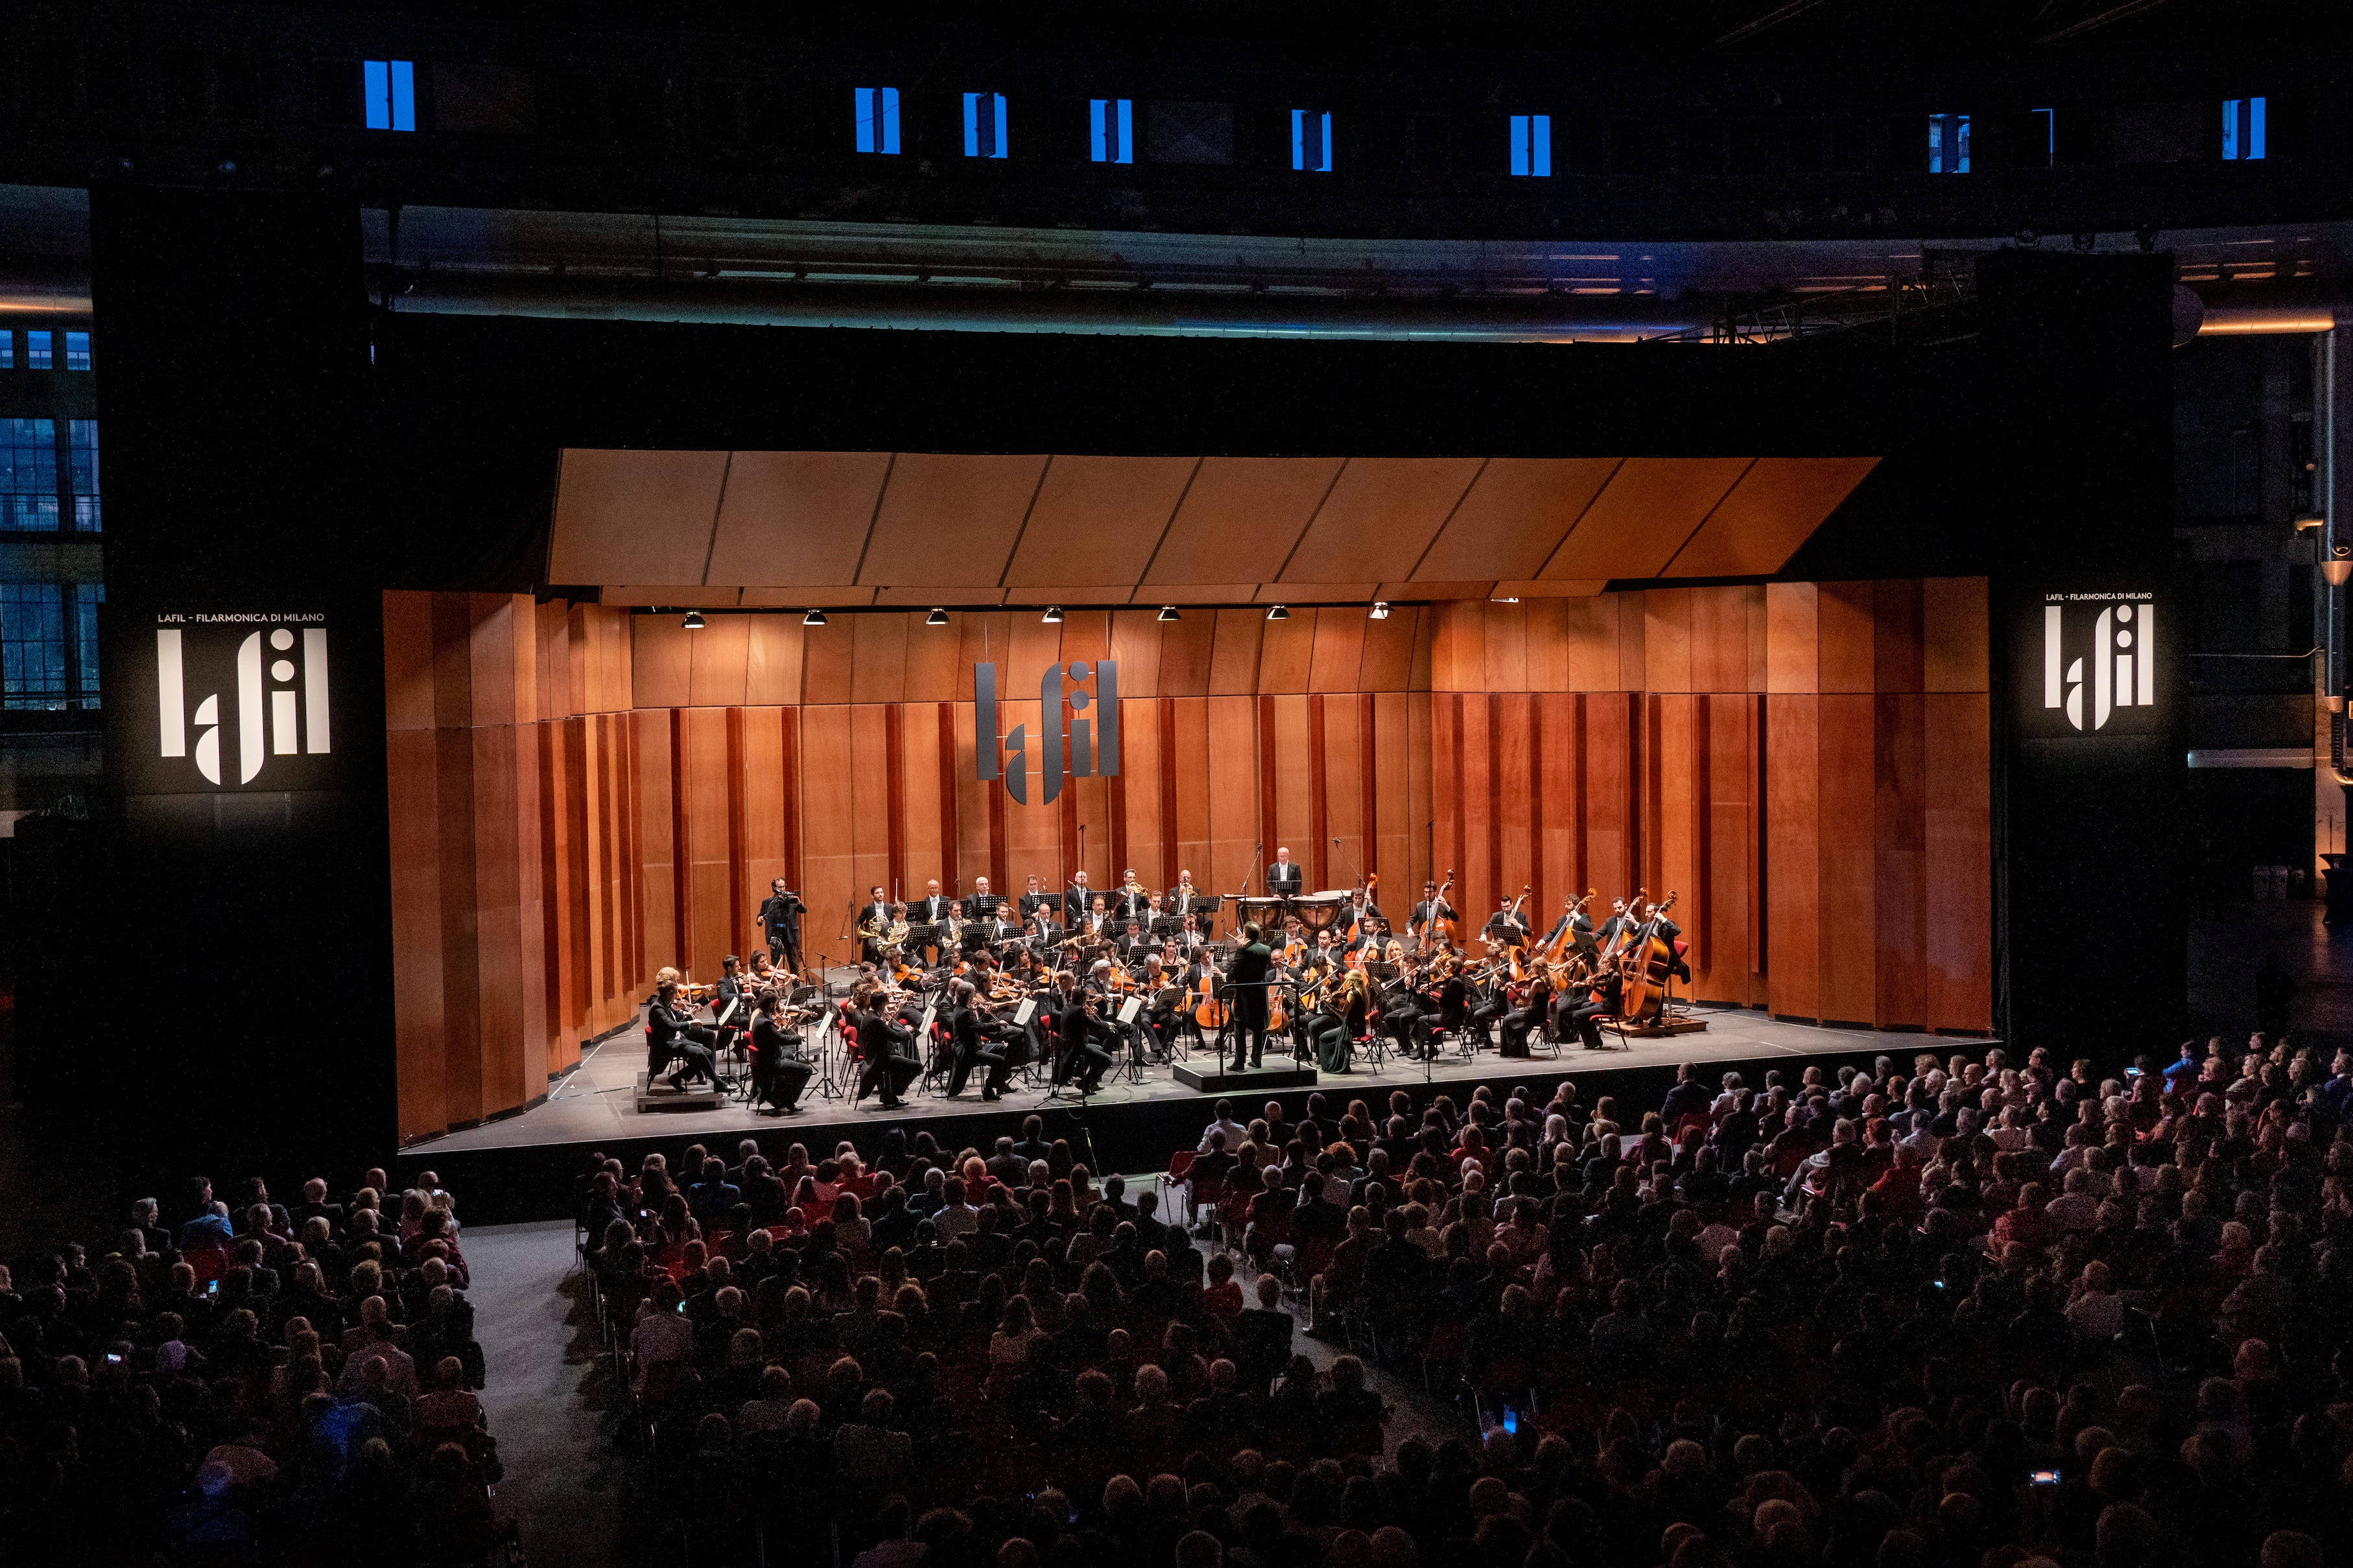 LaFil – Filarmonica di Milano, i 5 concerti dedicati alle opere di Felix Mendelssohn Bartholdy